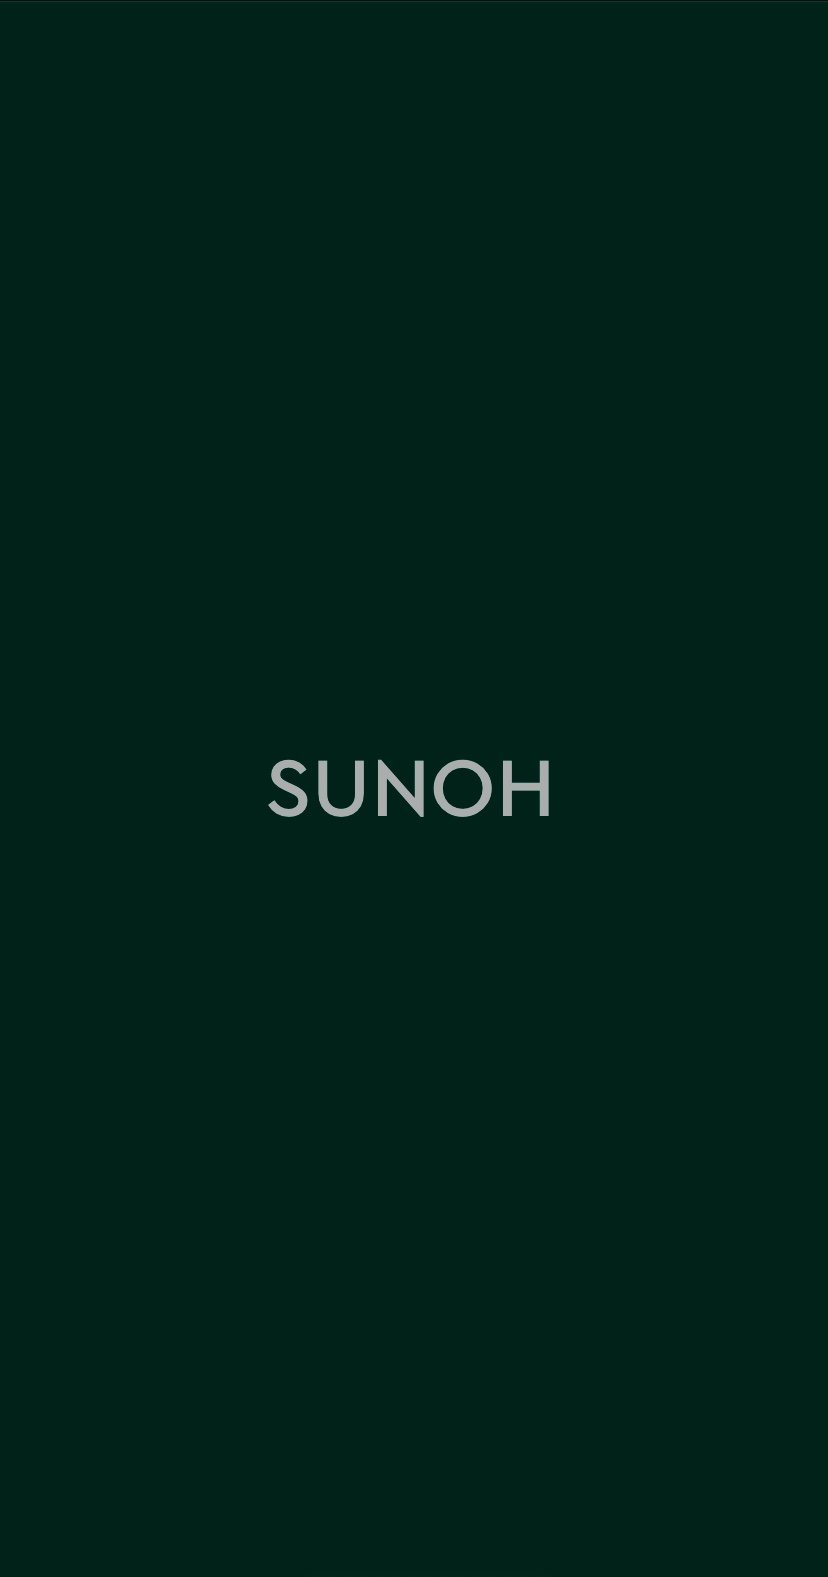 Sunoh